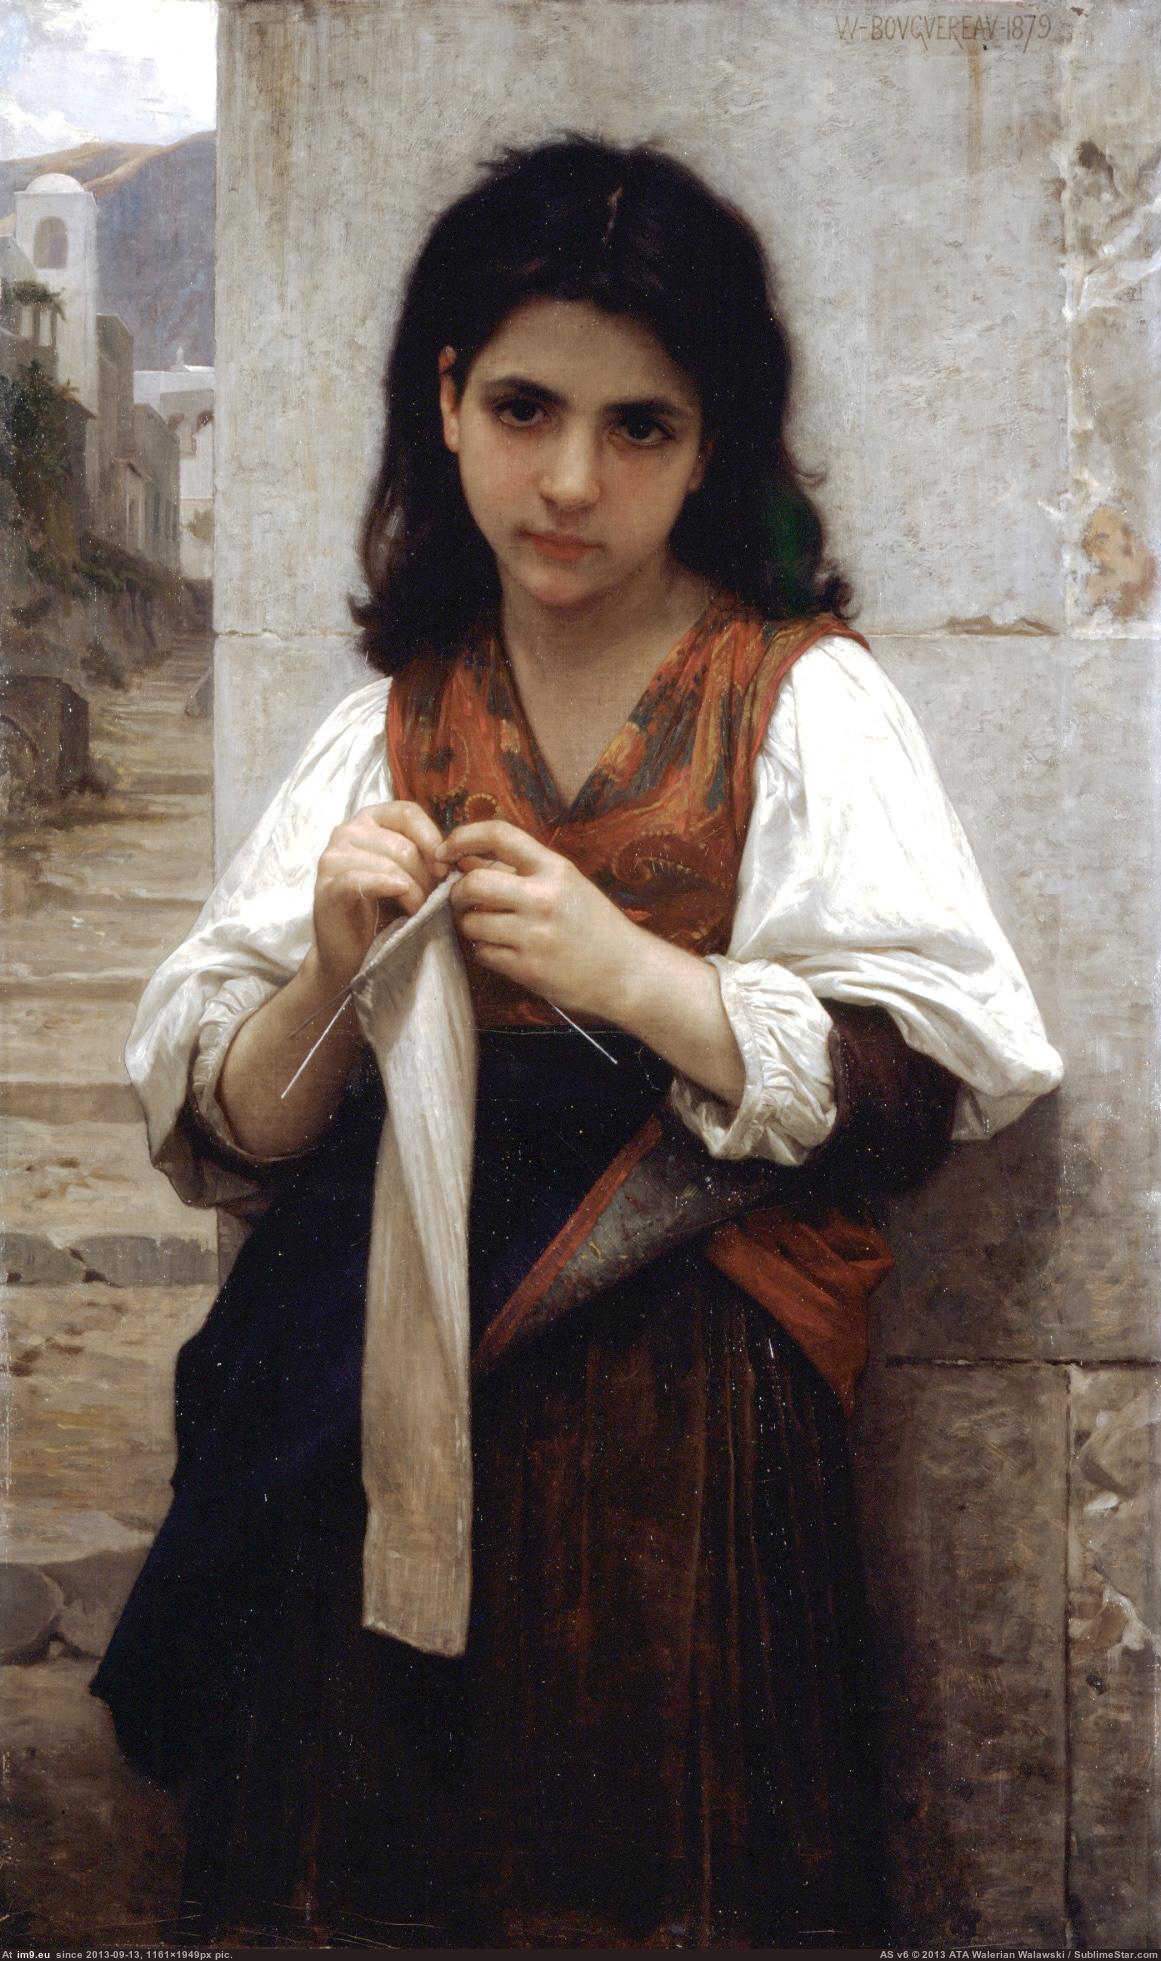 (1879) Tricoteuse - William Adolphe Bouguereau (in William Adolphe Bouguereau paintings (1825-1905))